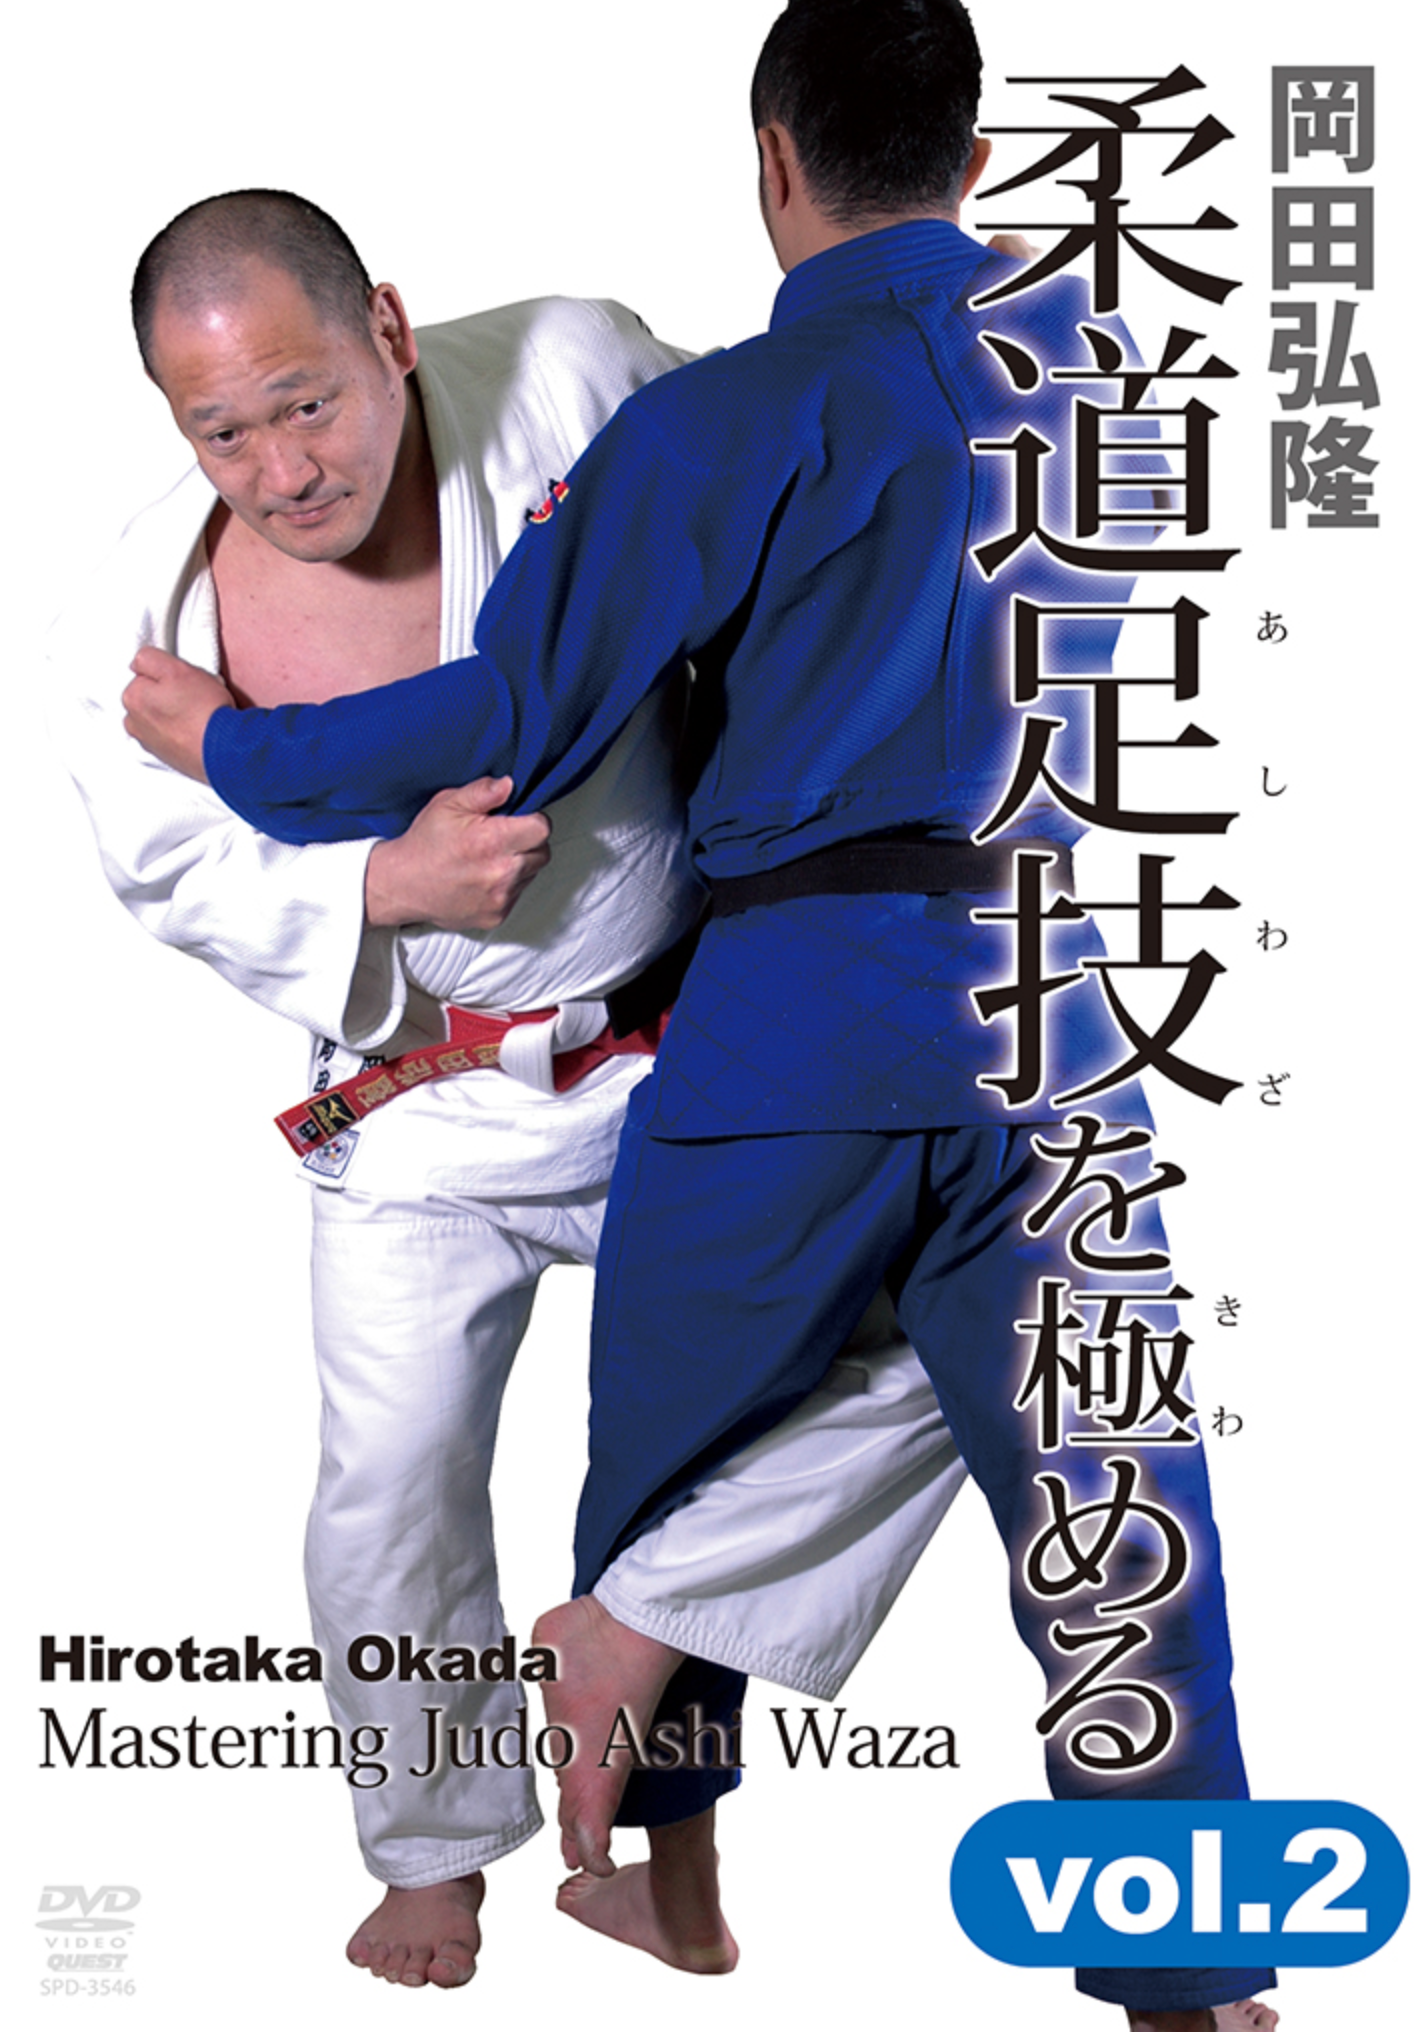 Mastering Judo Ashi Waza Vol 2 DVD by Hirotaka Okada - Budovideos Inc